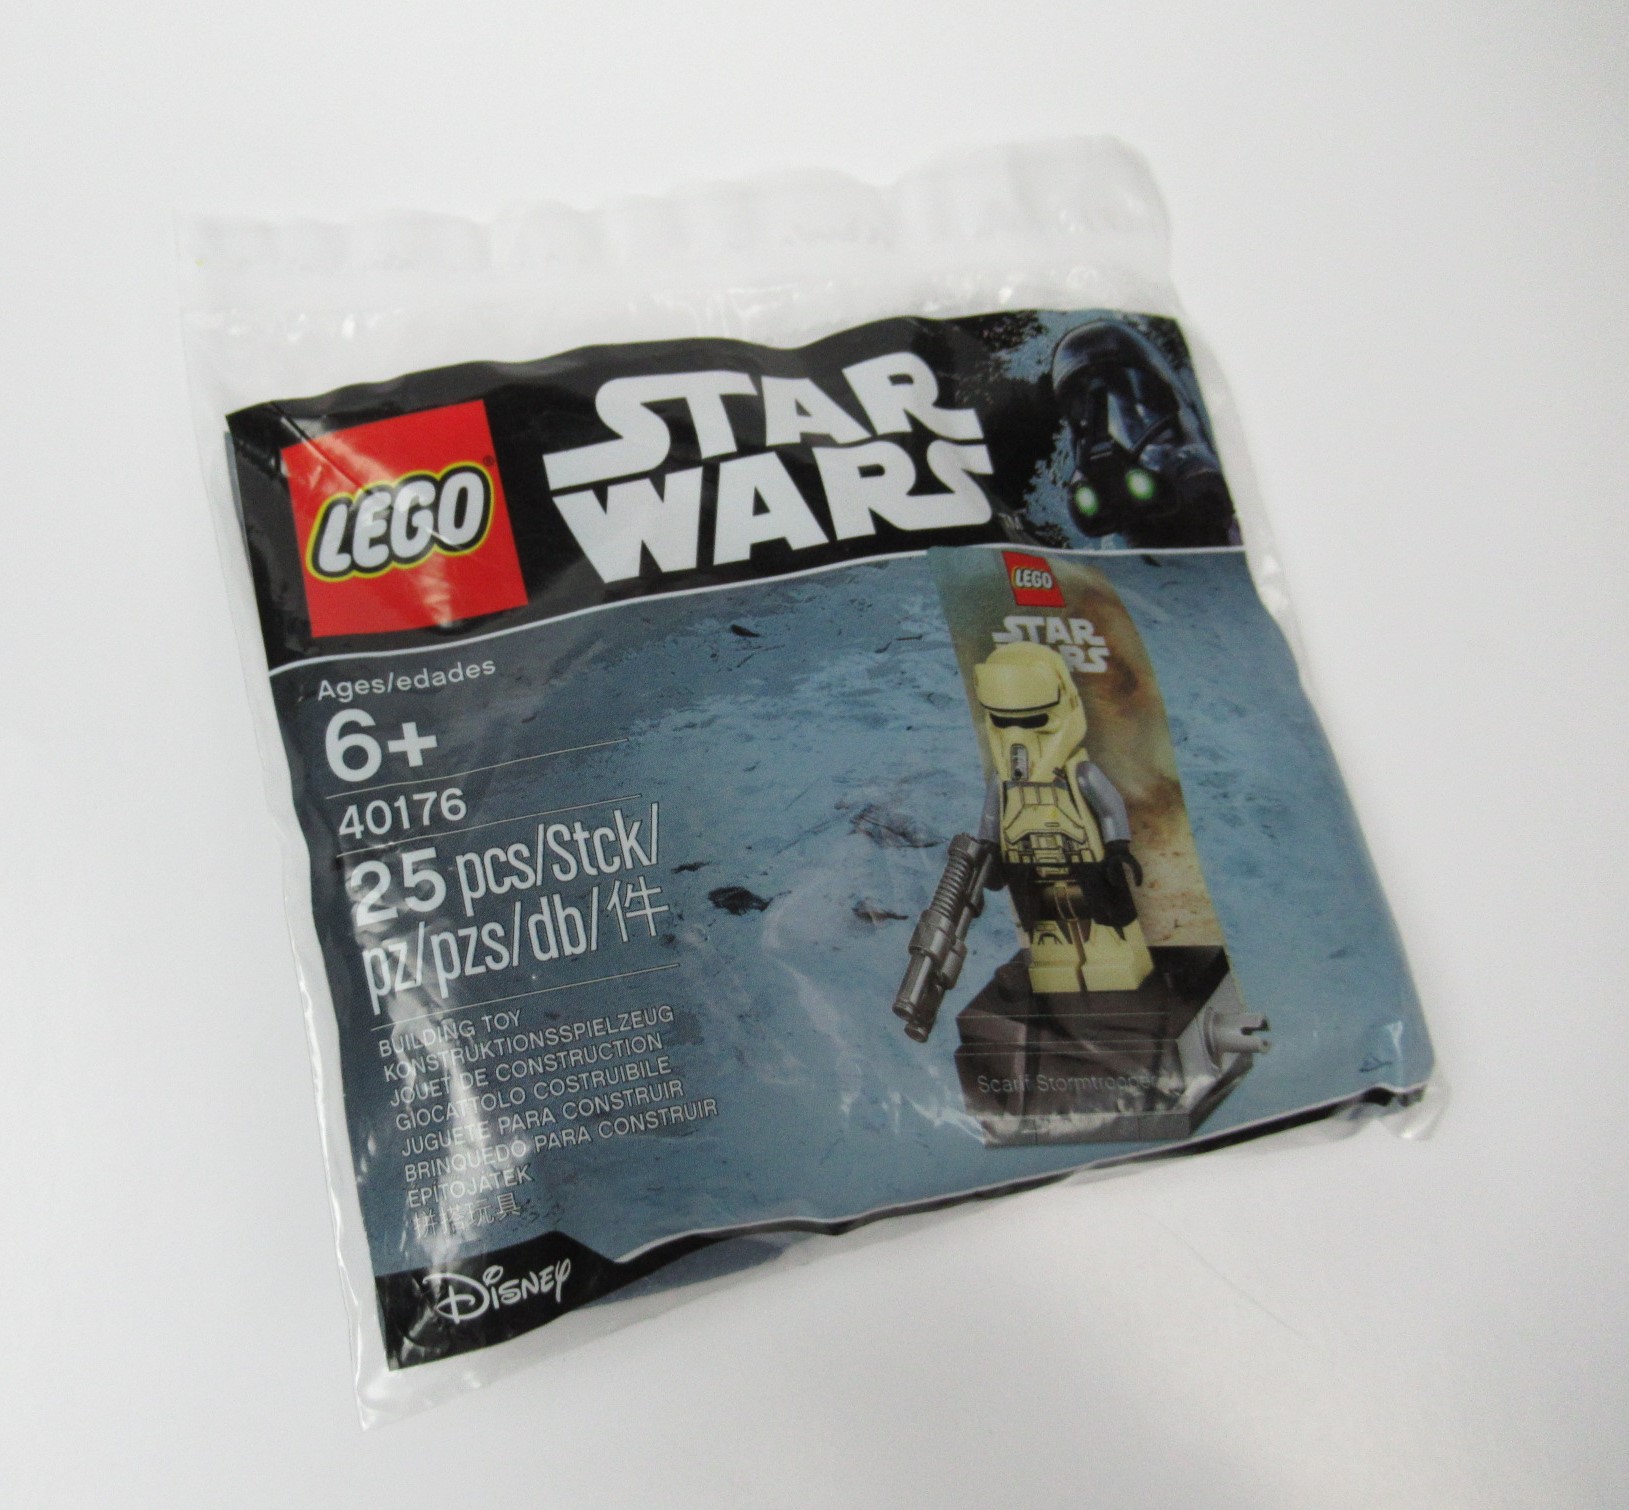 LEGO® Star Wars 40176 Star Wars Scarif Stormtrooper Polybagの画像